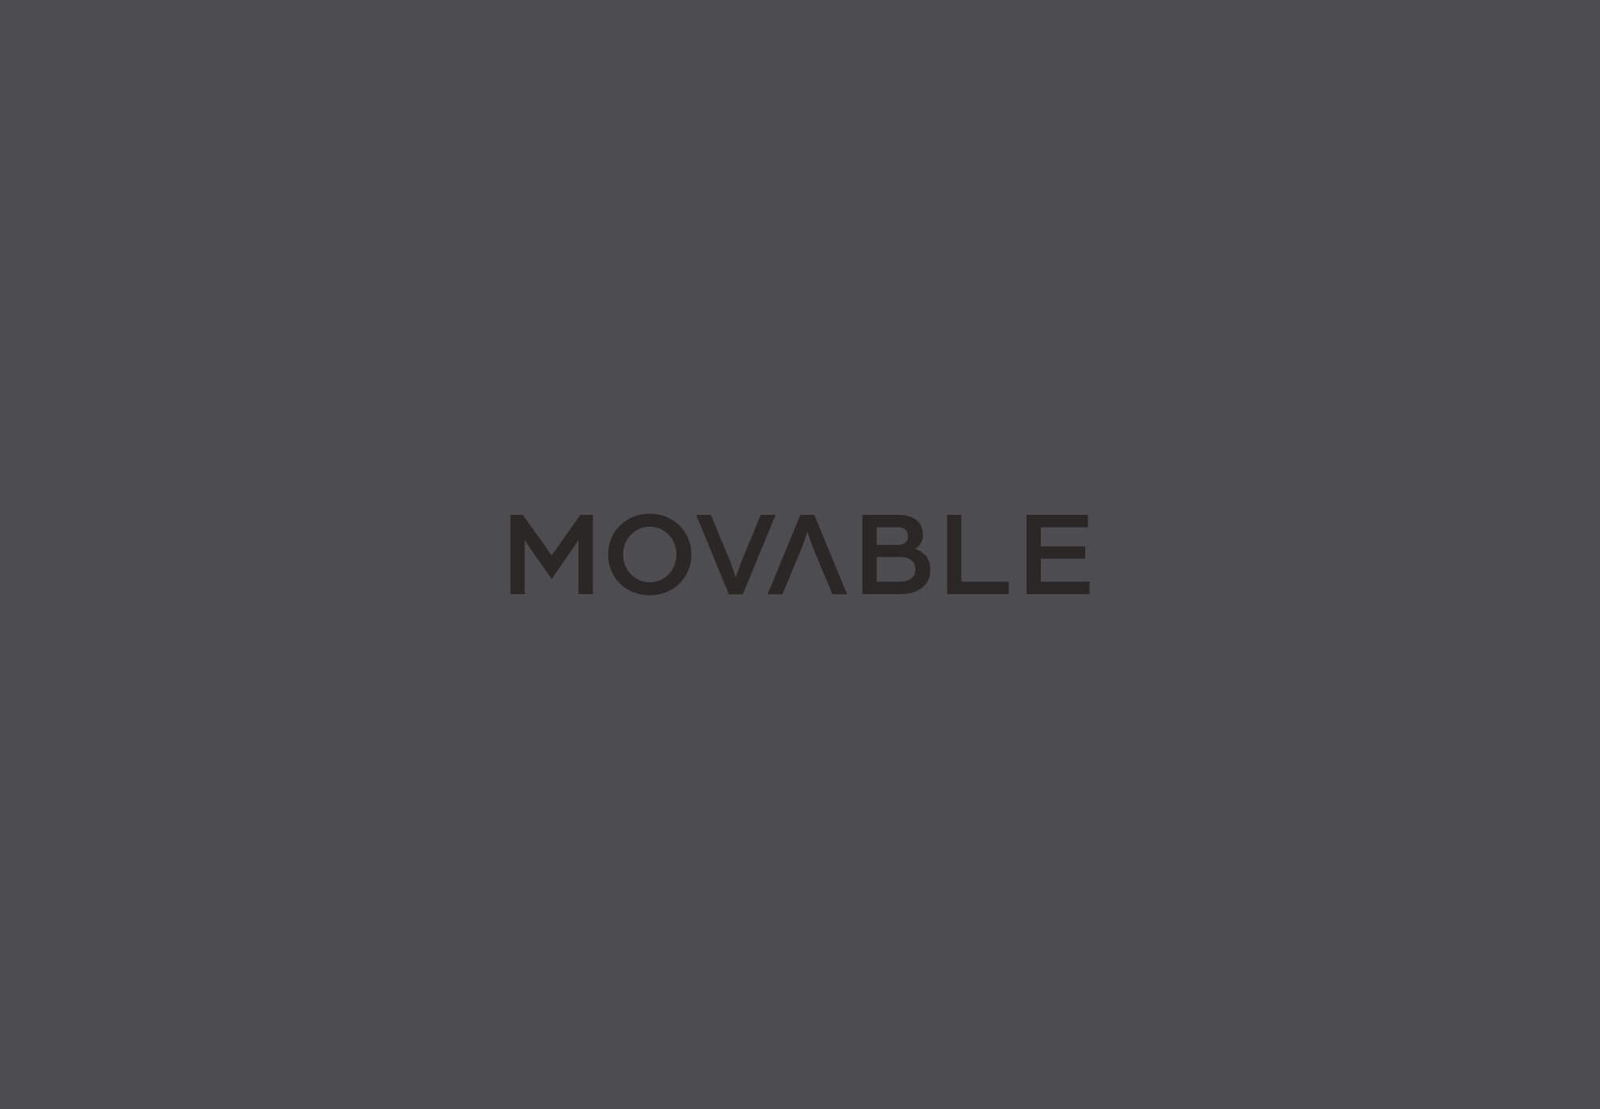 Movable - Brand and Website - Real Estate Logo Wordmark | Atollon - a design company